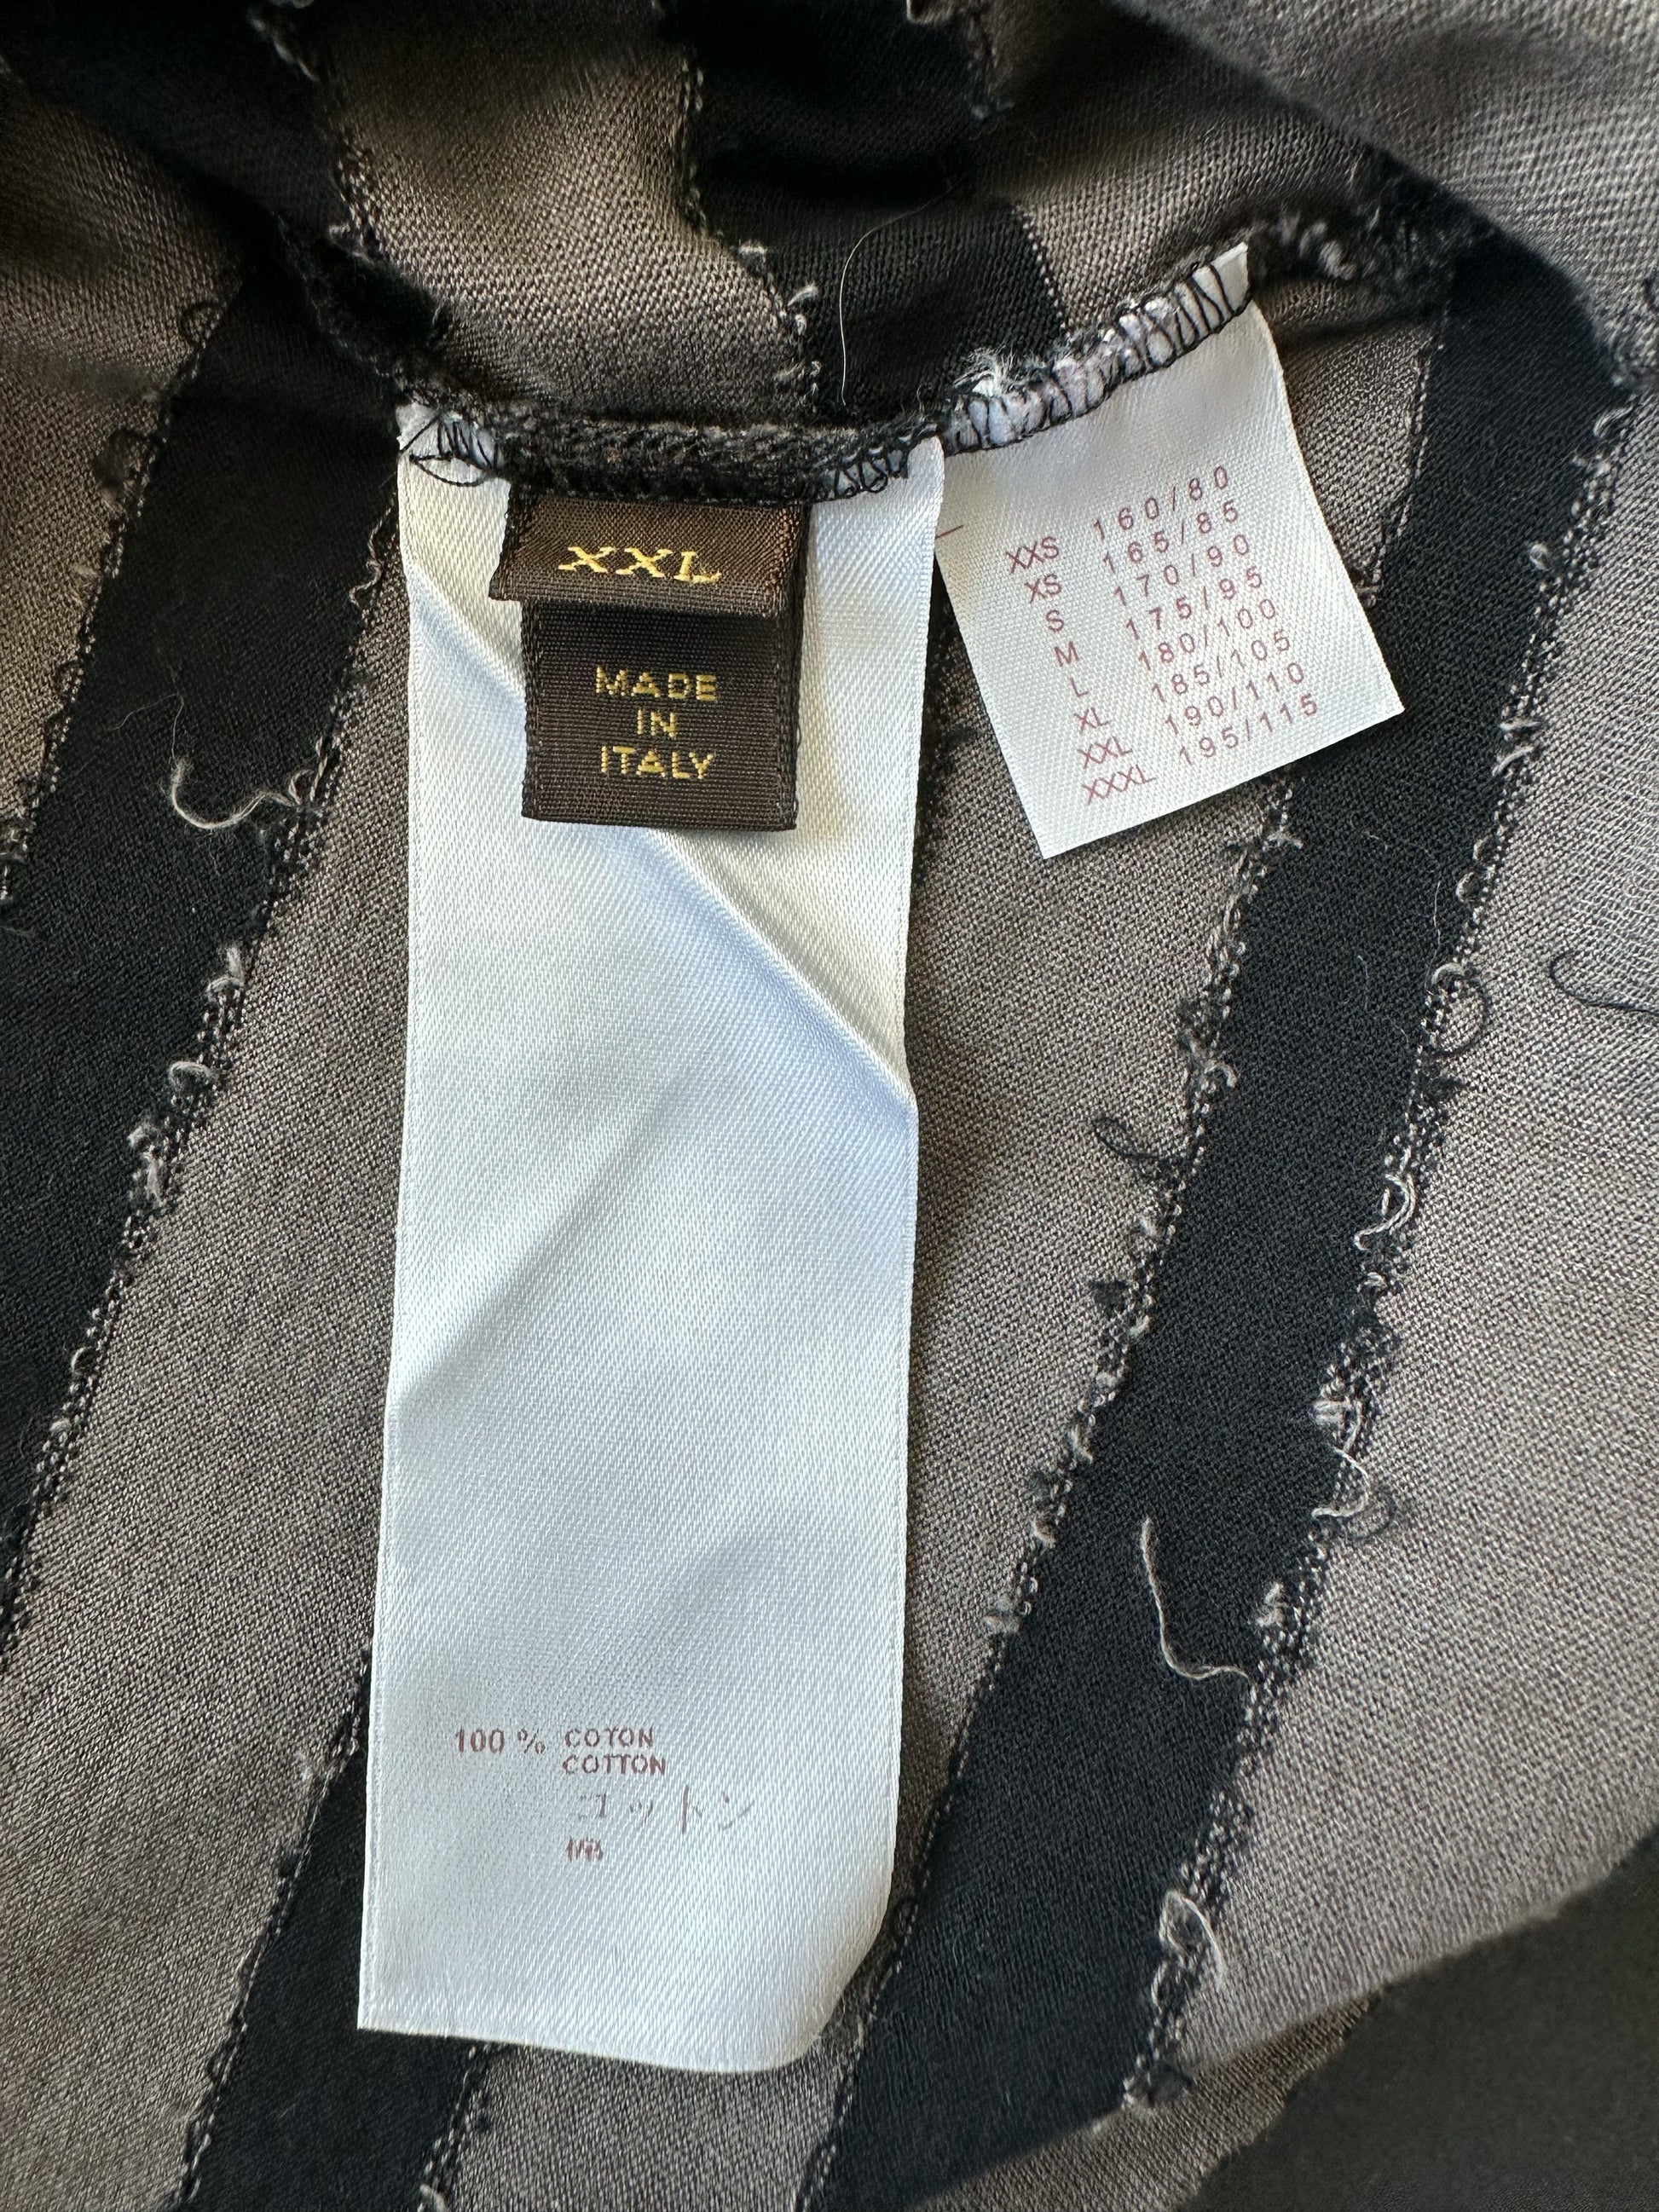 louis vuitton stephen sprouse shirt Hot Sale - OFF 63%